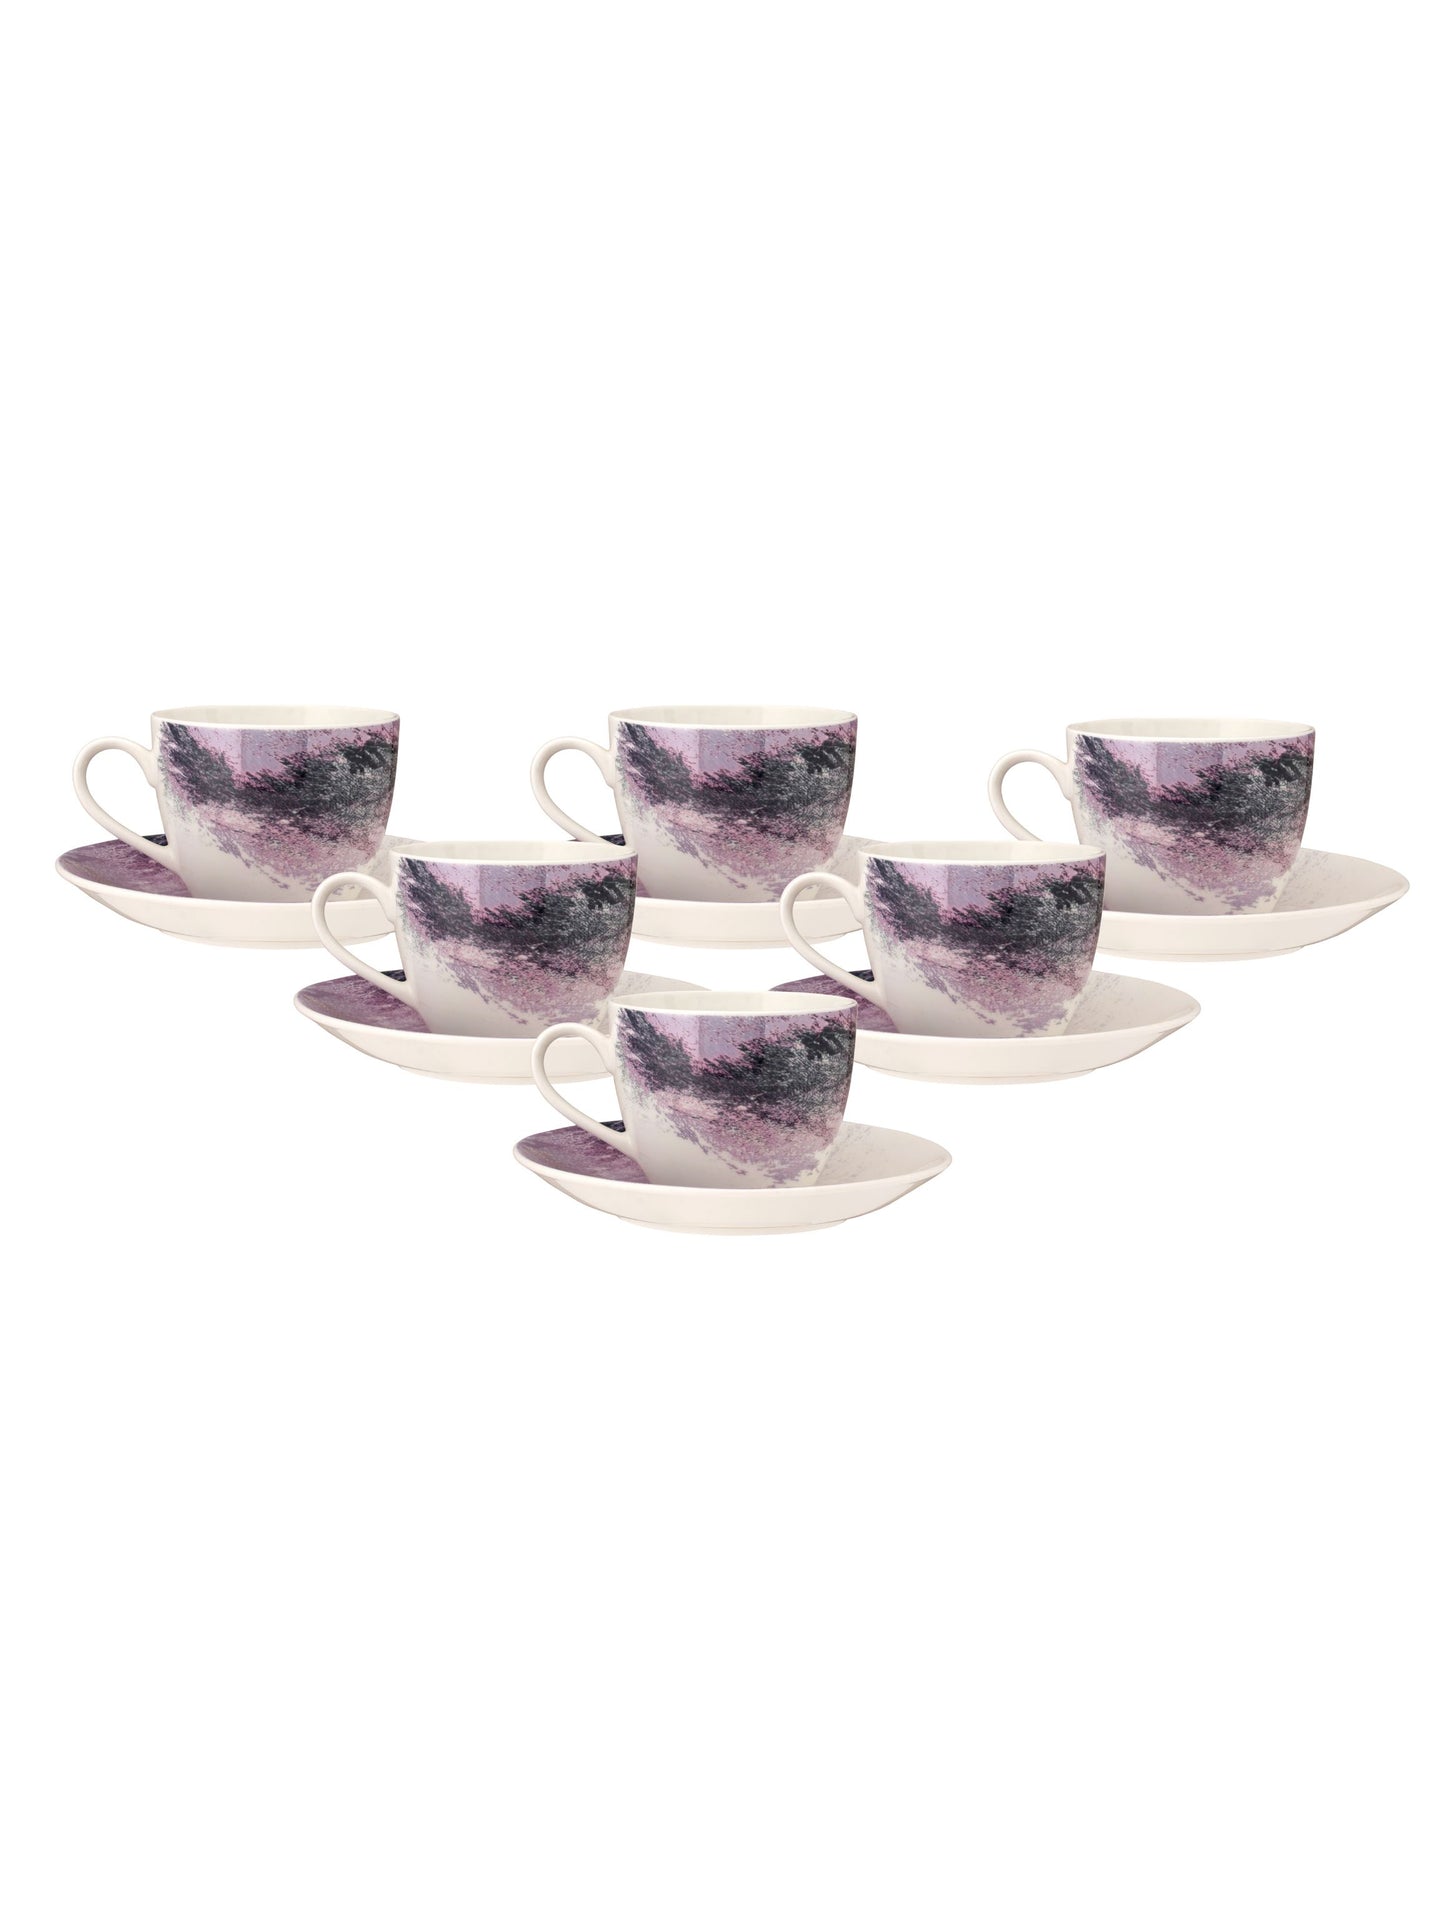 JCPL Cream Lava Cup & Saucer, 170ml, Set of 12 (6 Cups + 6 Saucers) (L9)